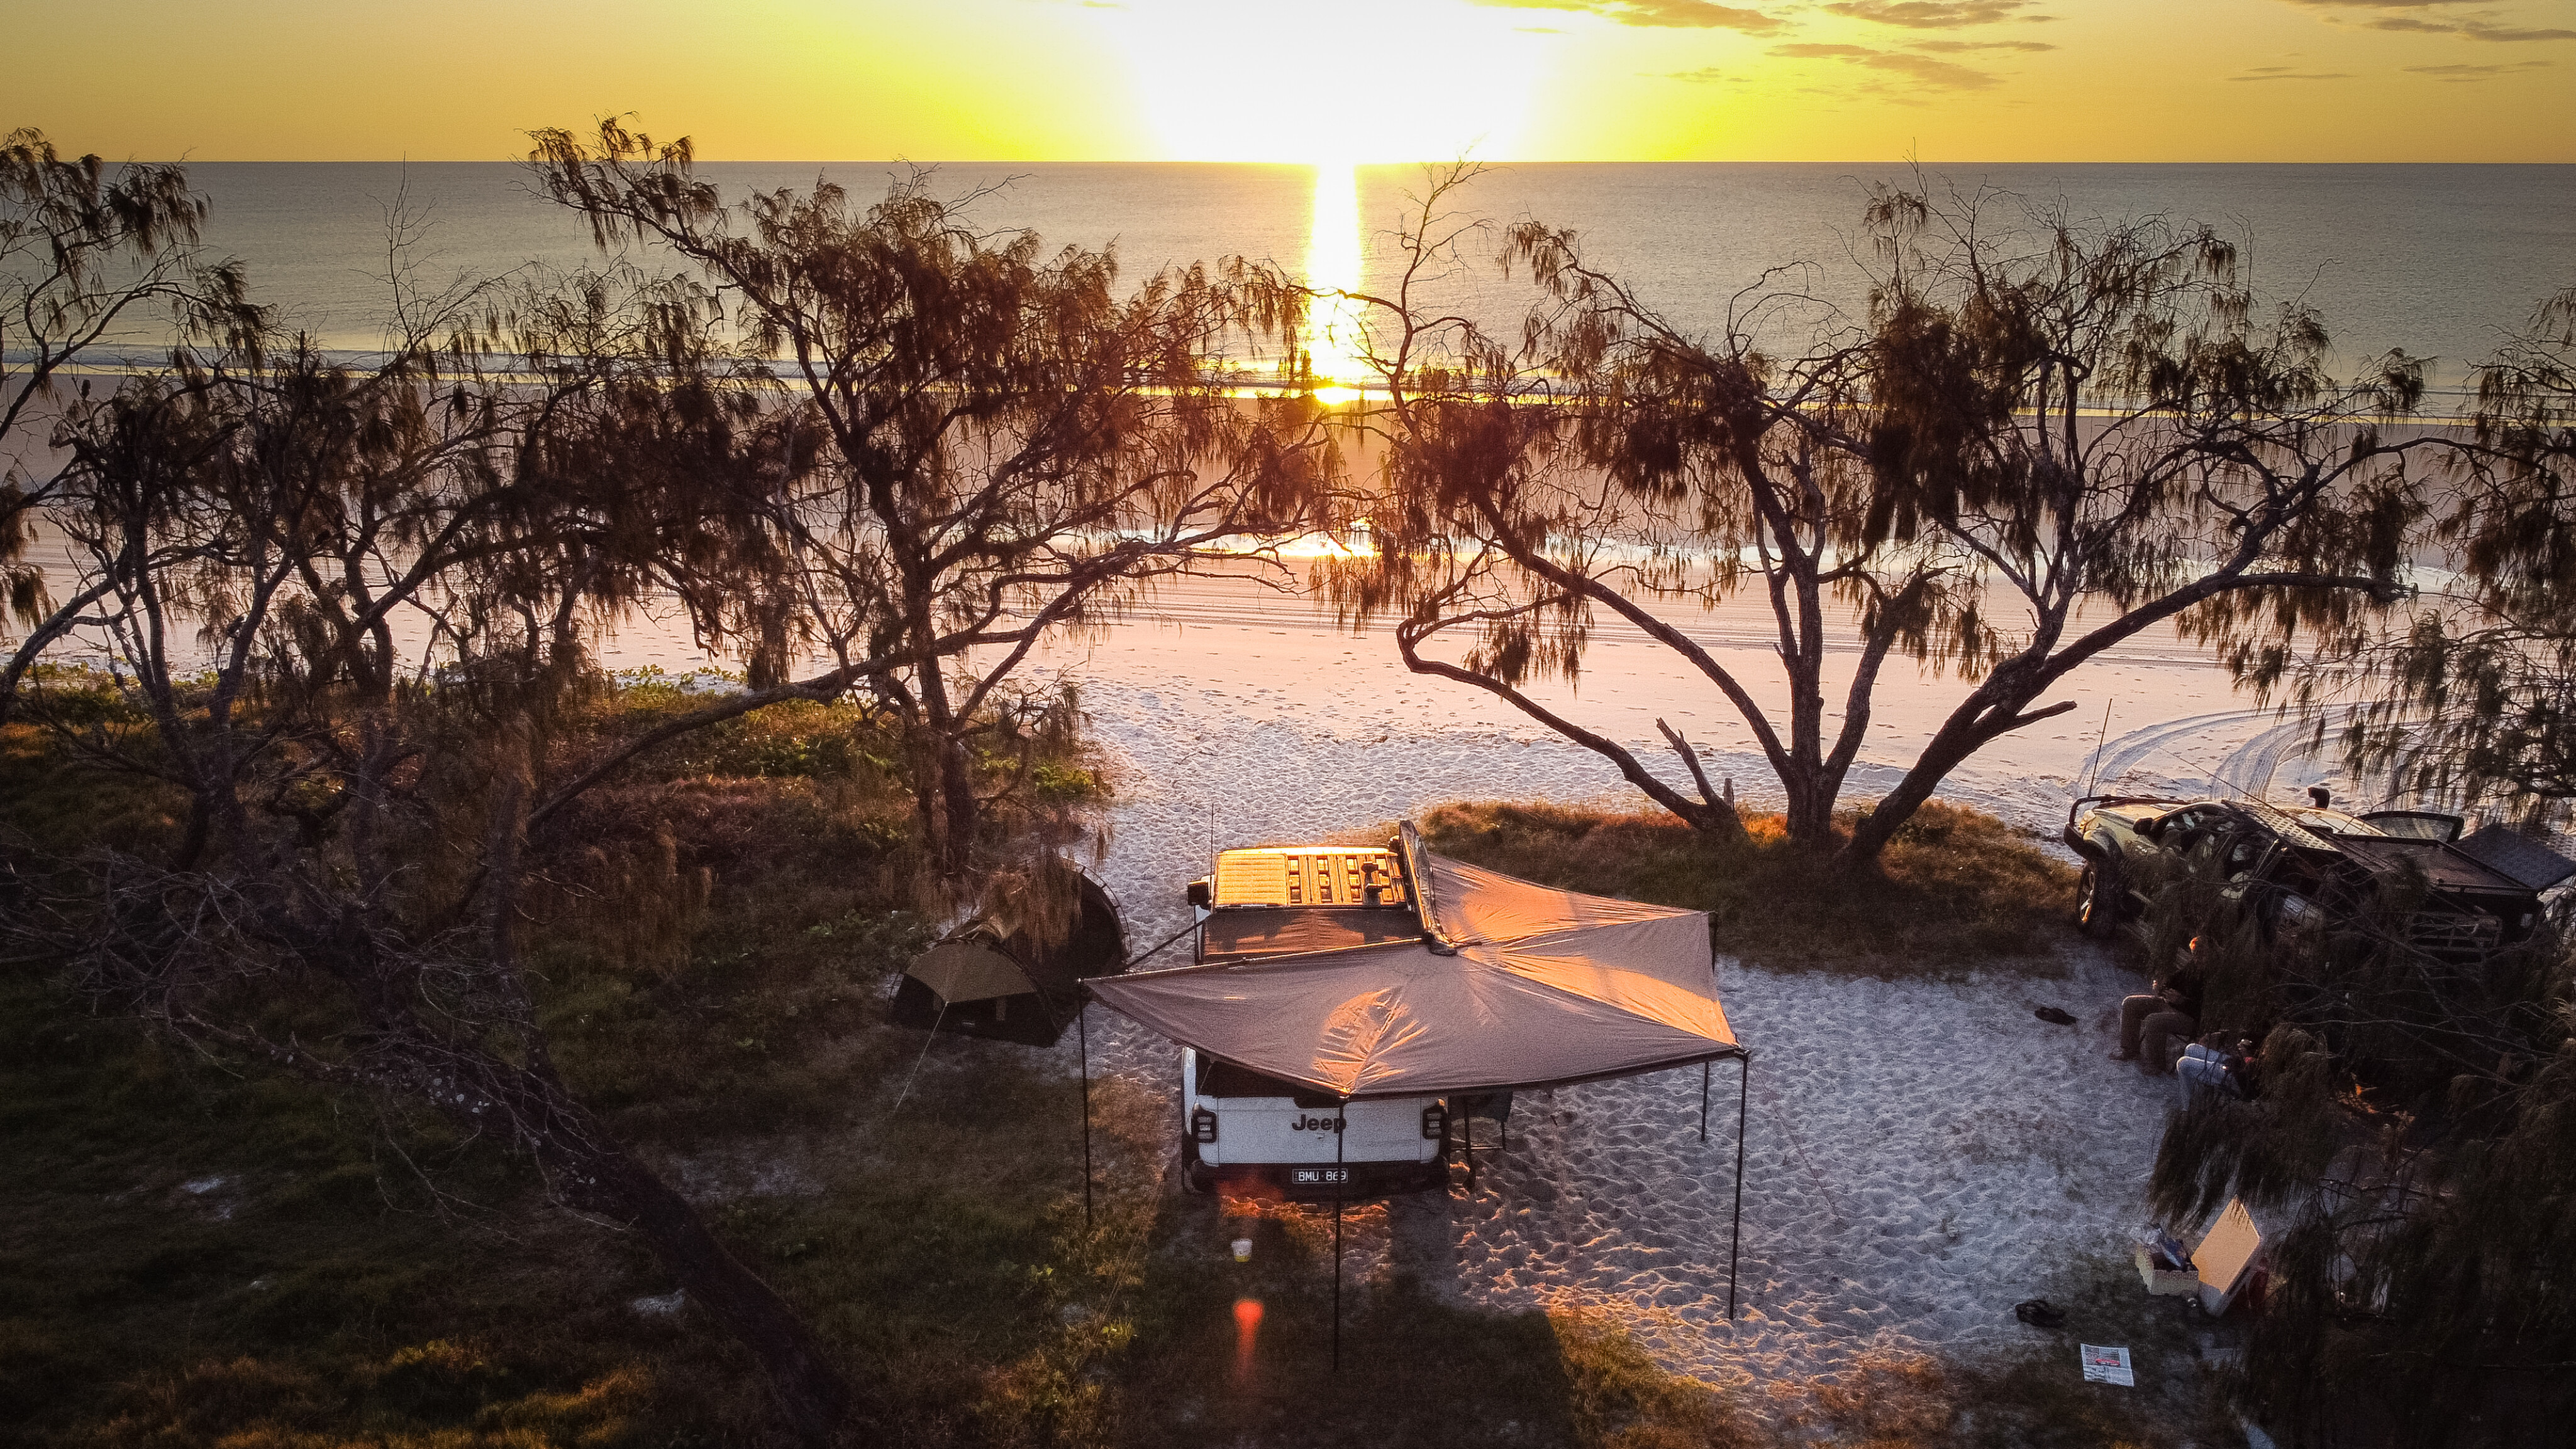 7e23242b/trcm fraser island beach sunset camp westsidek gari explore 4x4 australia jpg